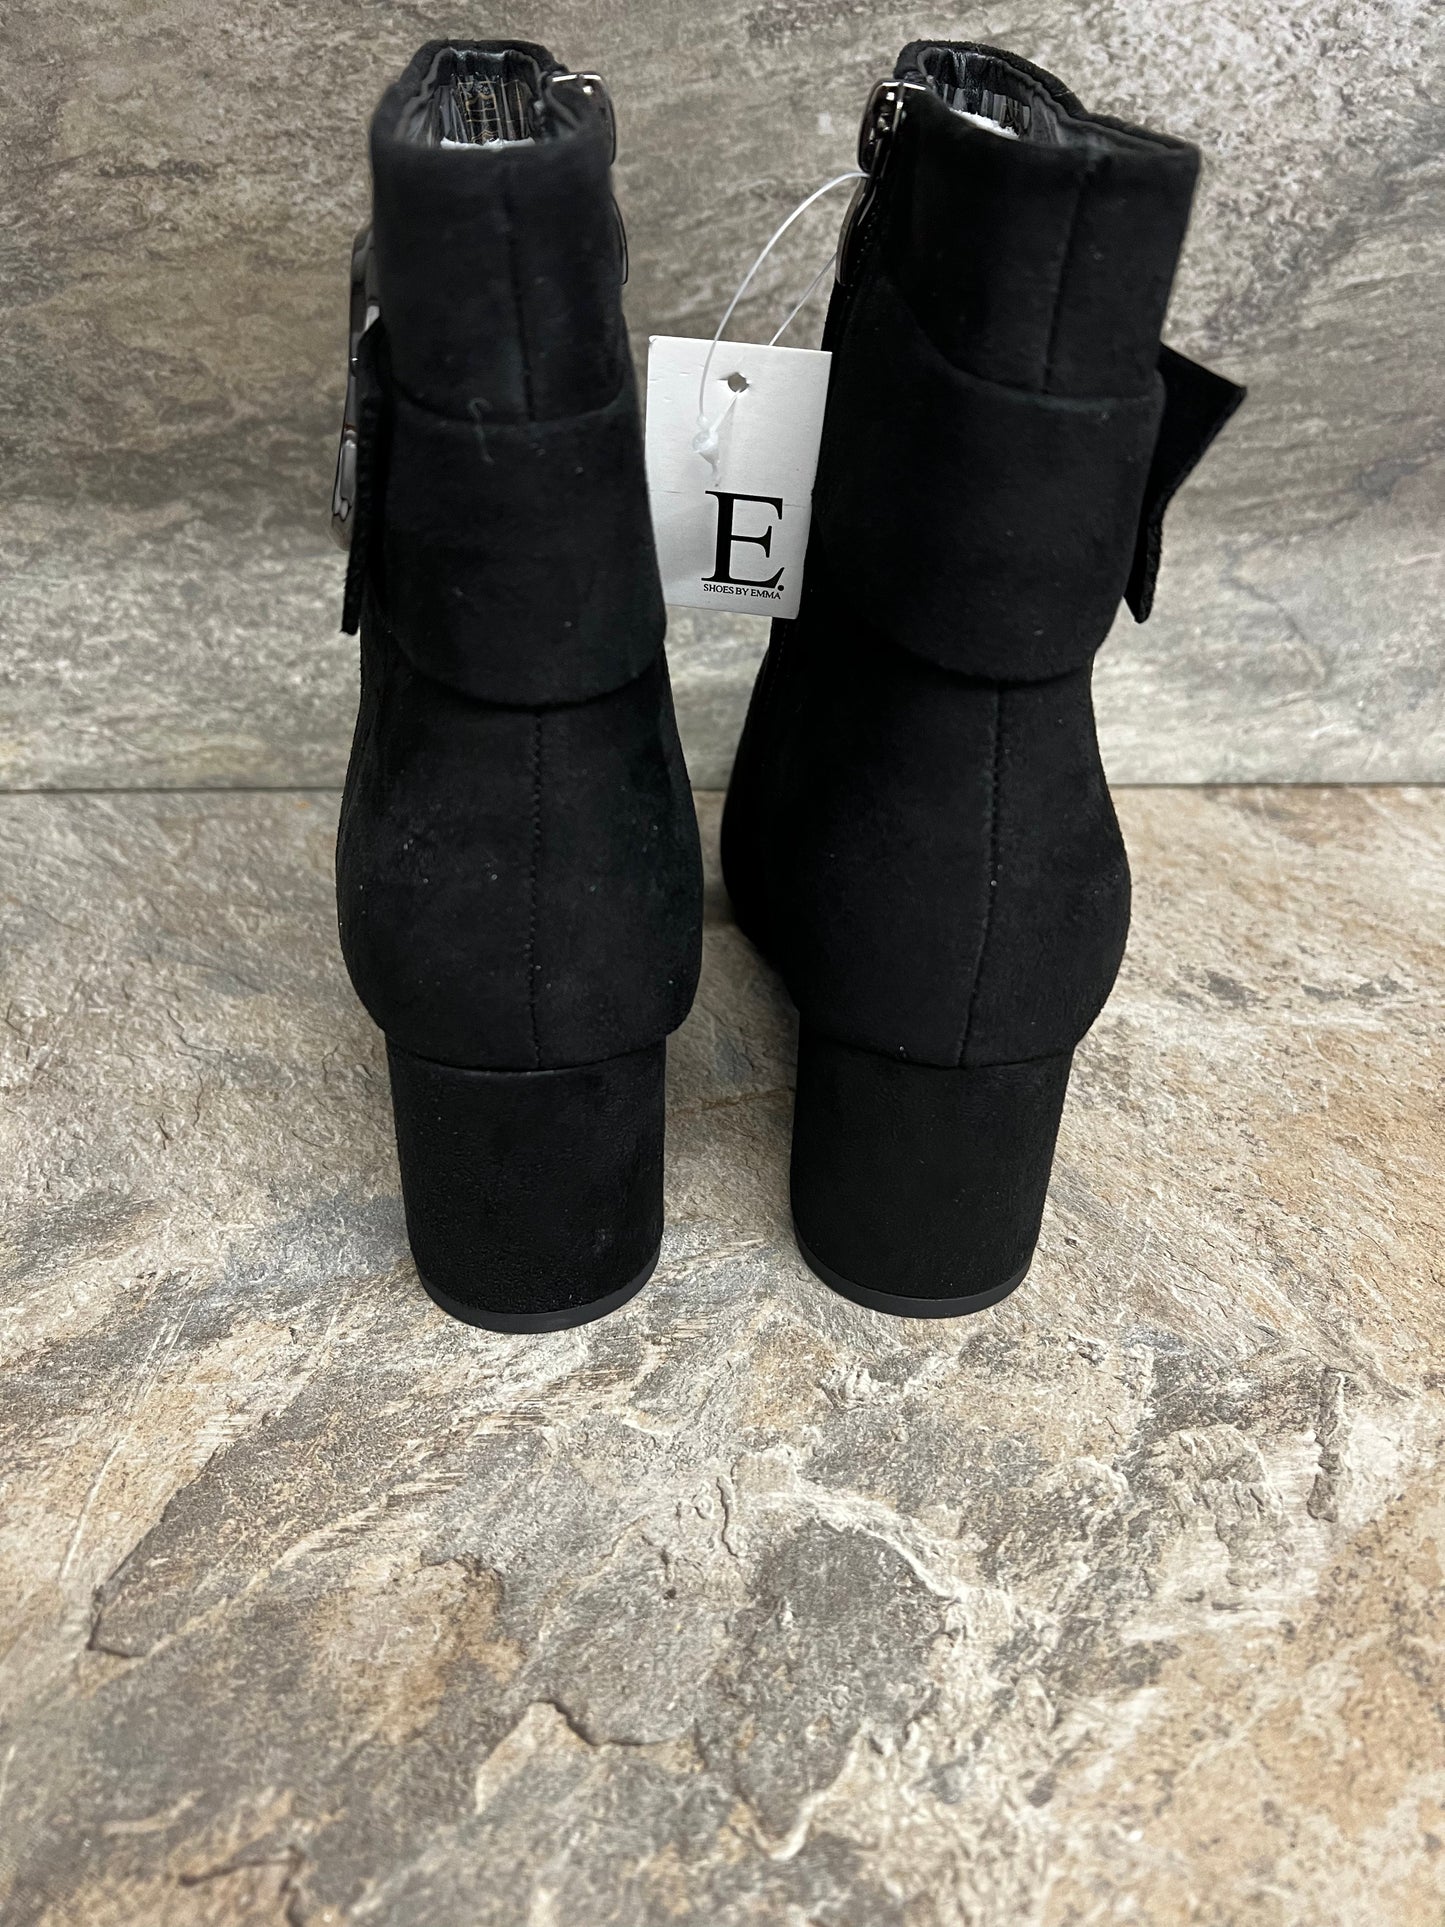 Tina black heeled buckle boot sizes 4-8